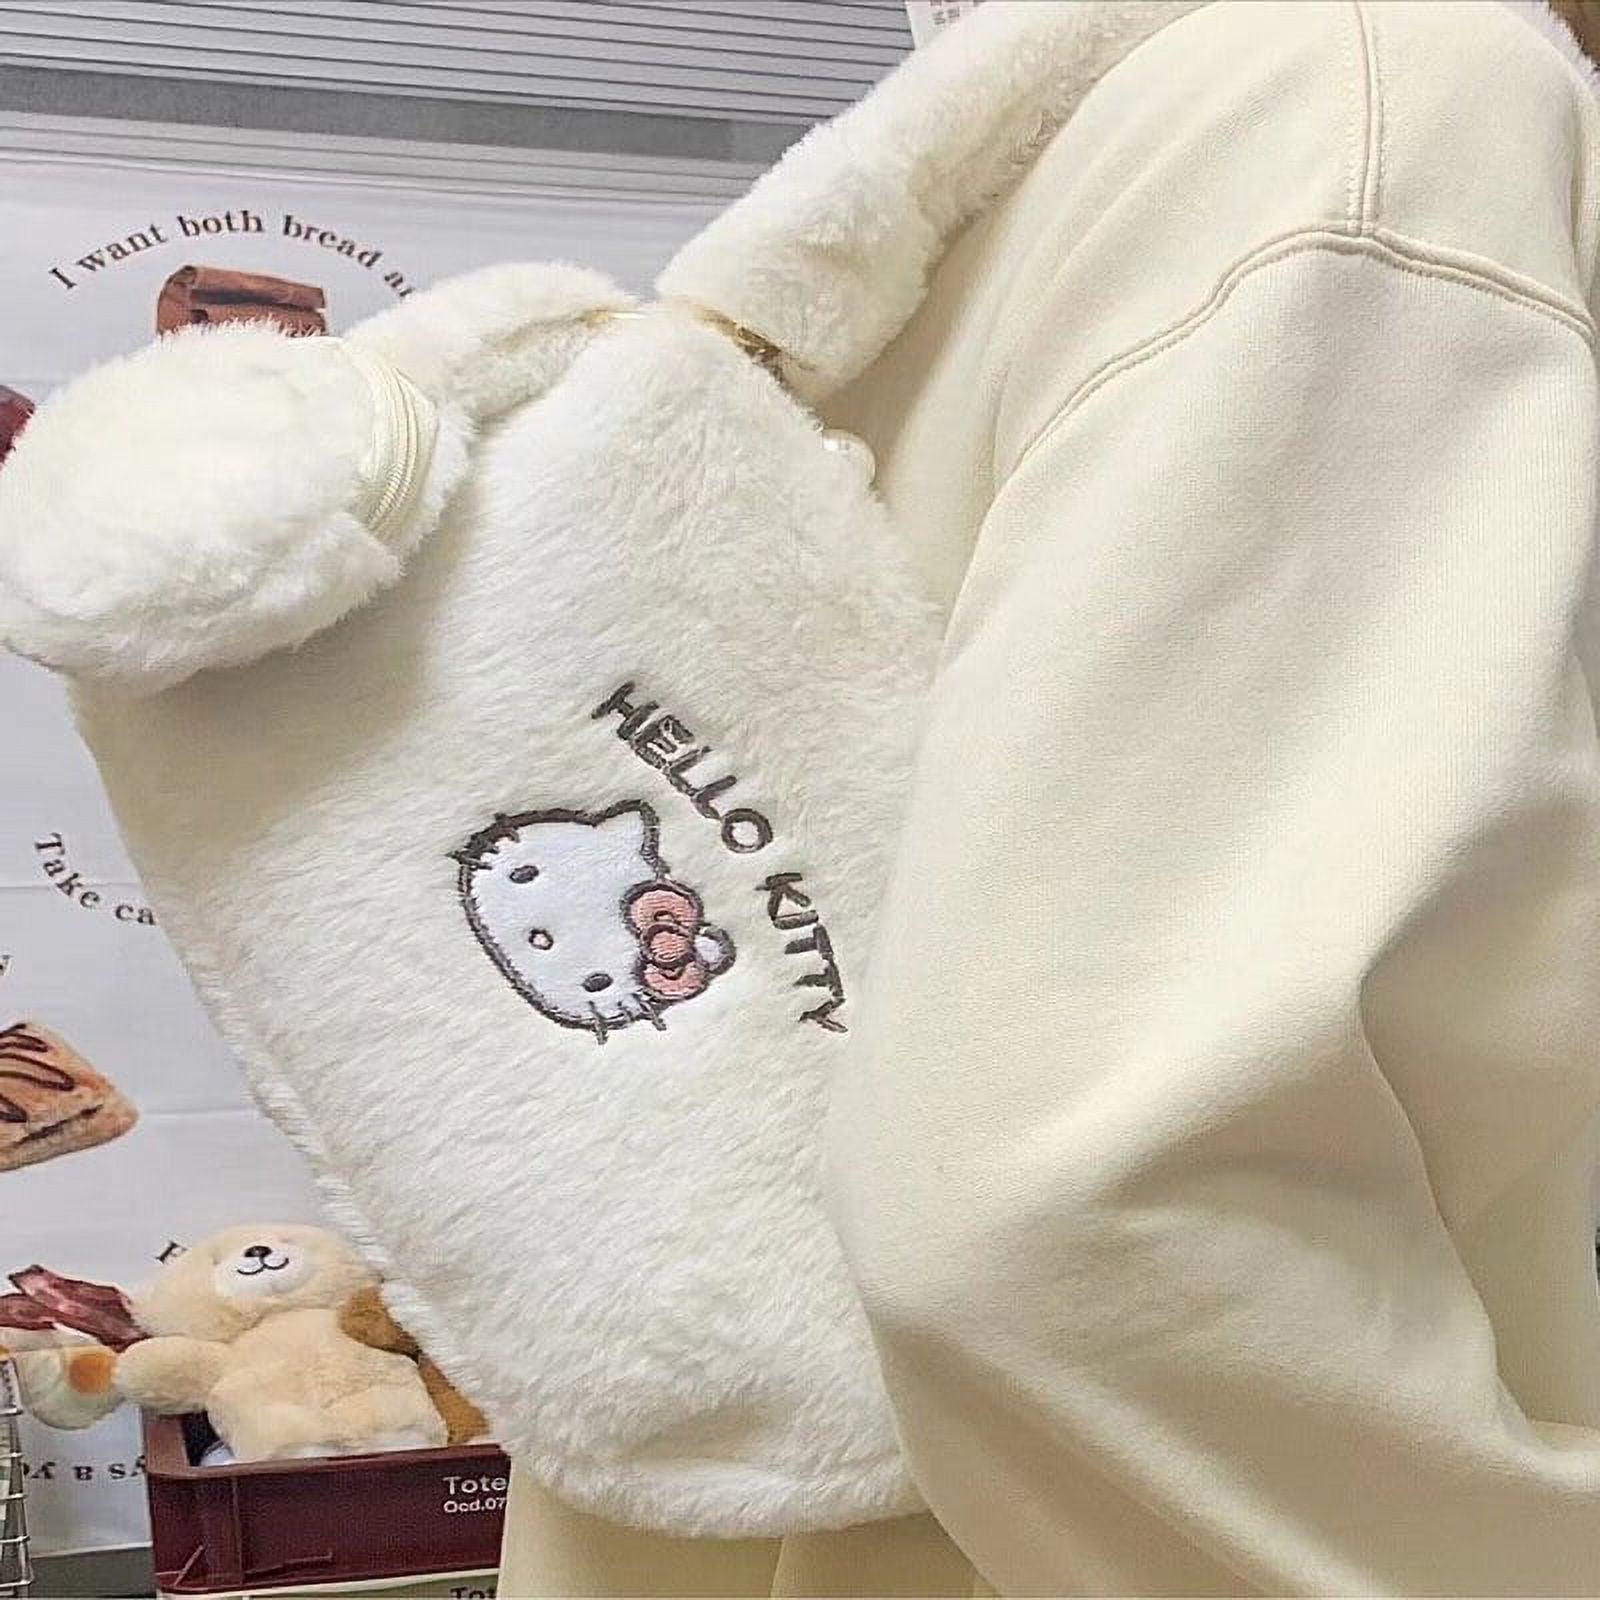 Harajuku Kawaii Fashion Y2K Hello Kitty Baguette Bag – The Kawaii Factory